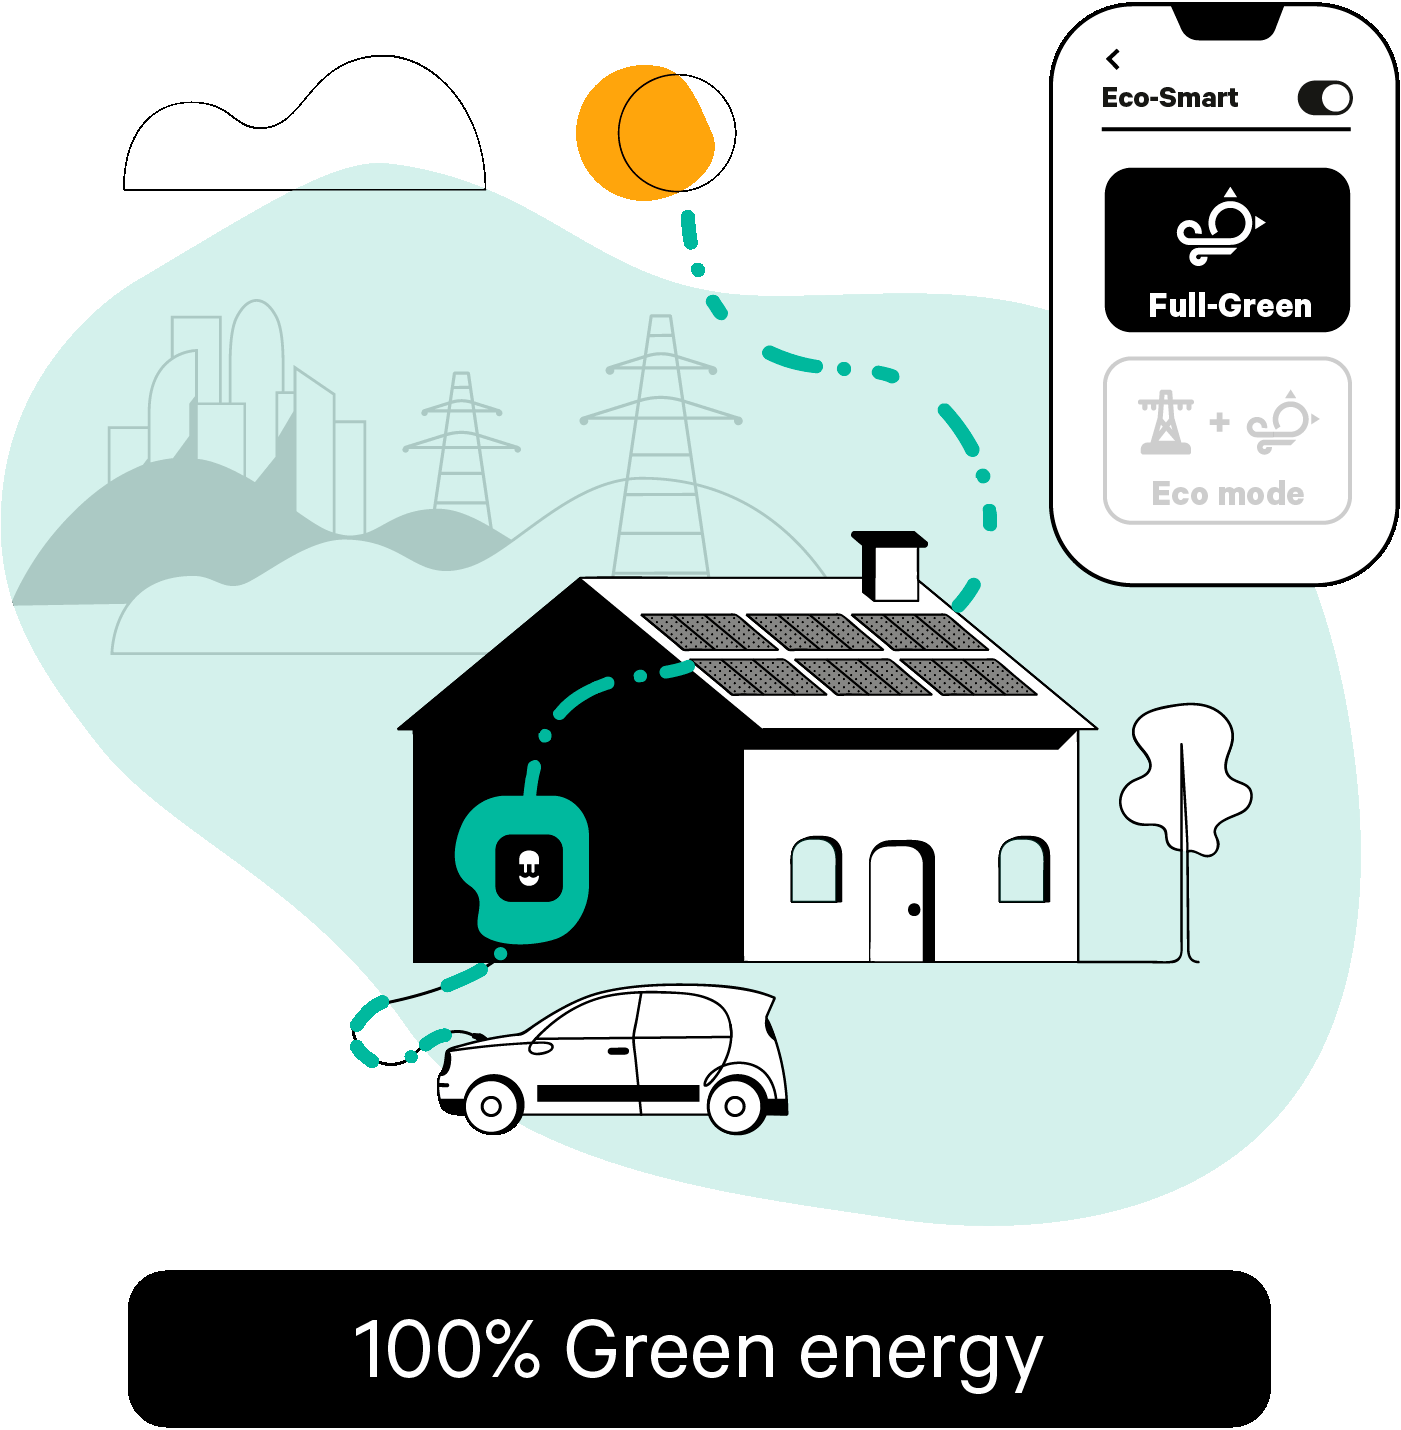 Eco-smart